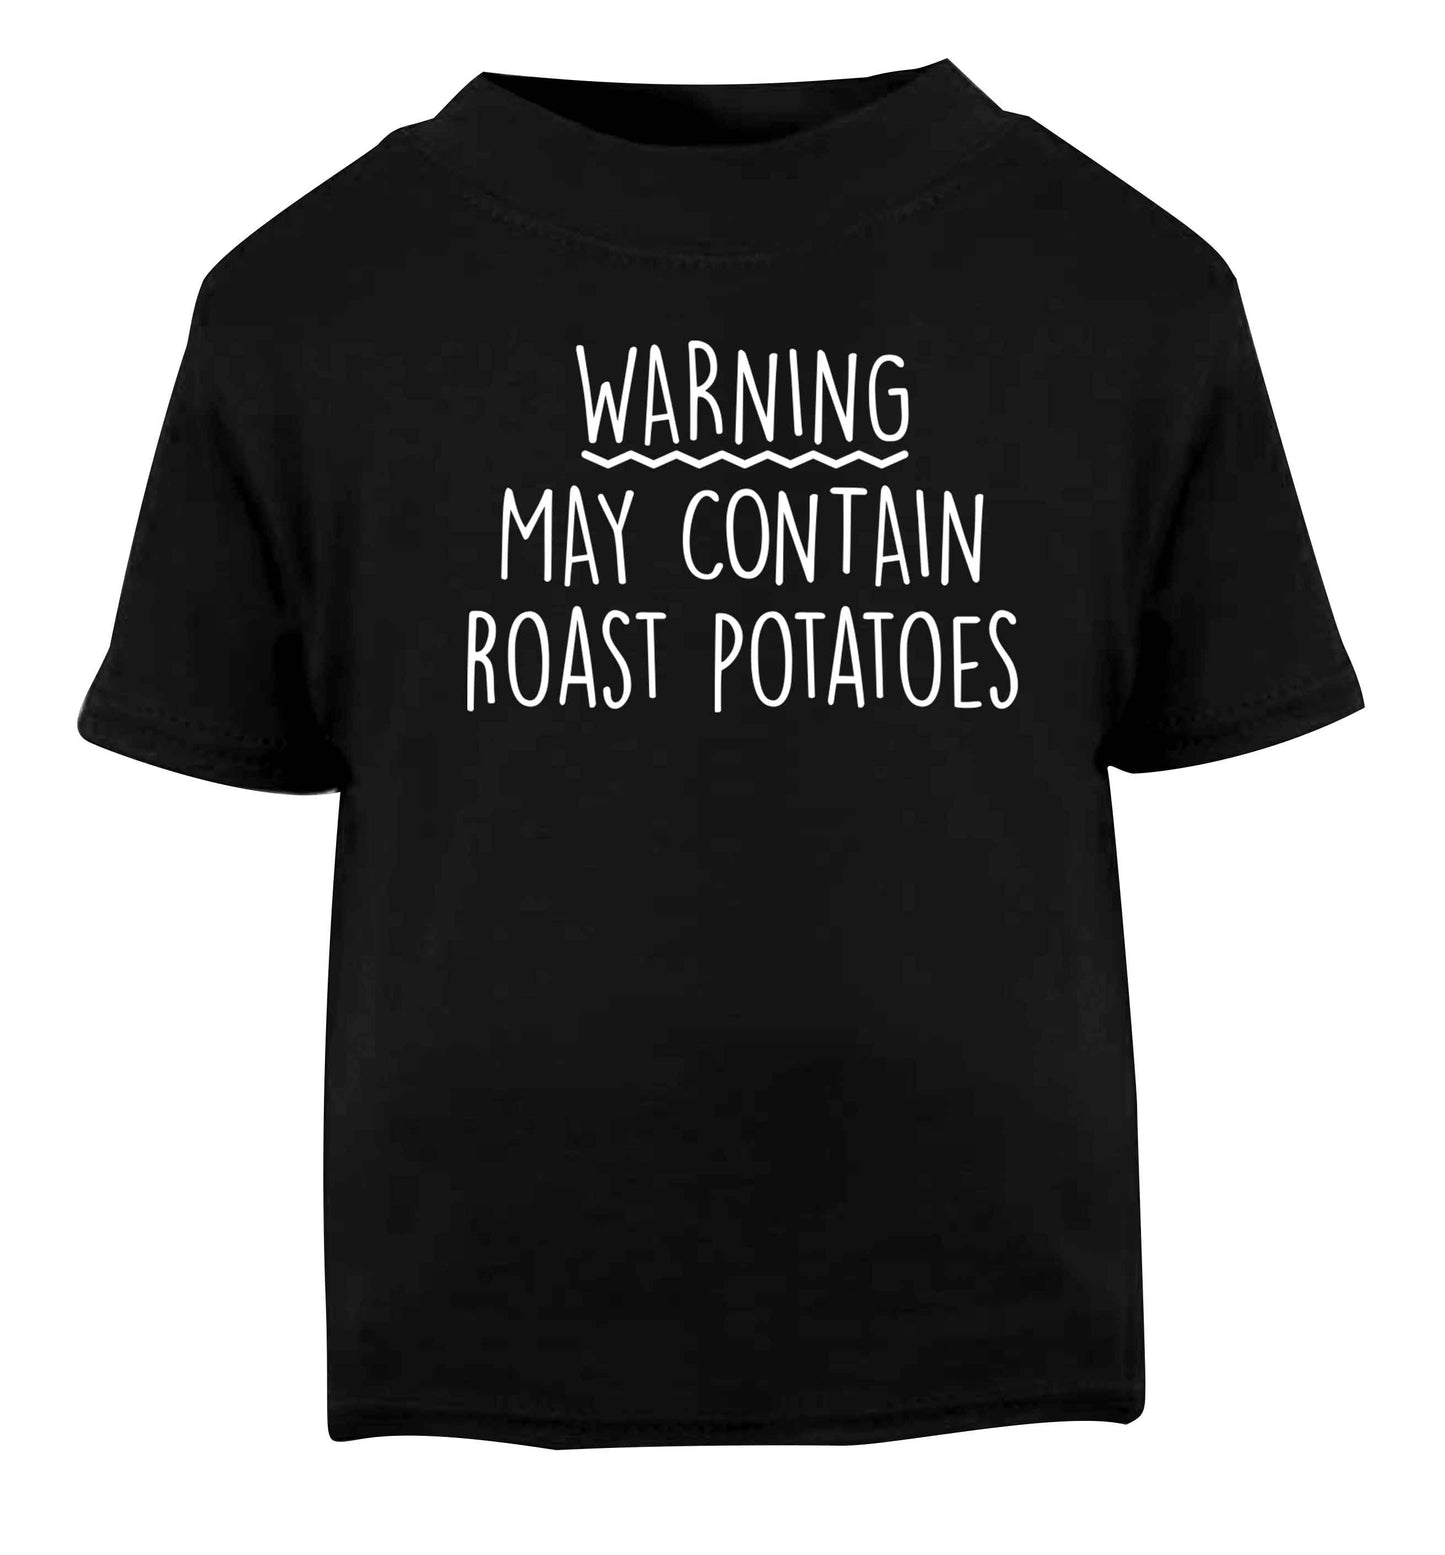 Warning may containg roast potatoes Black baby toddler Tshirt 2 years